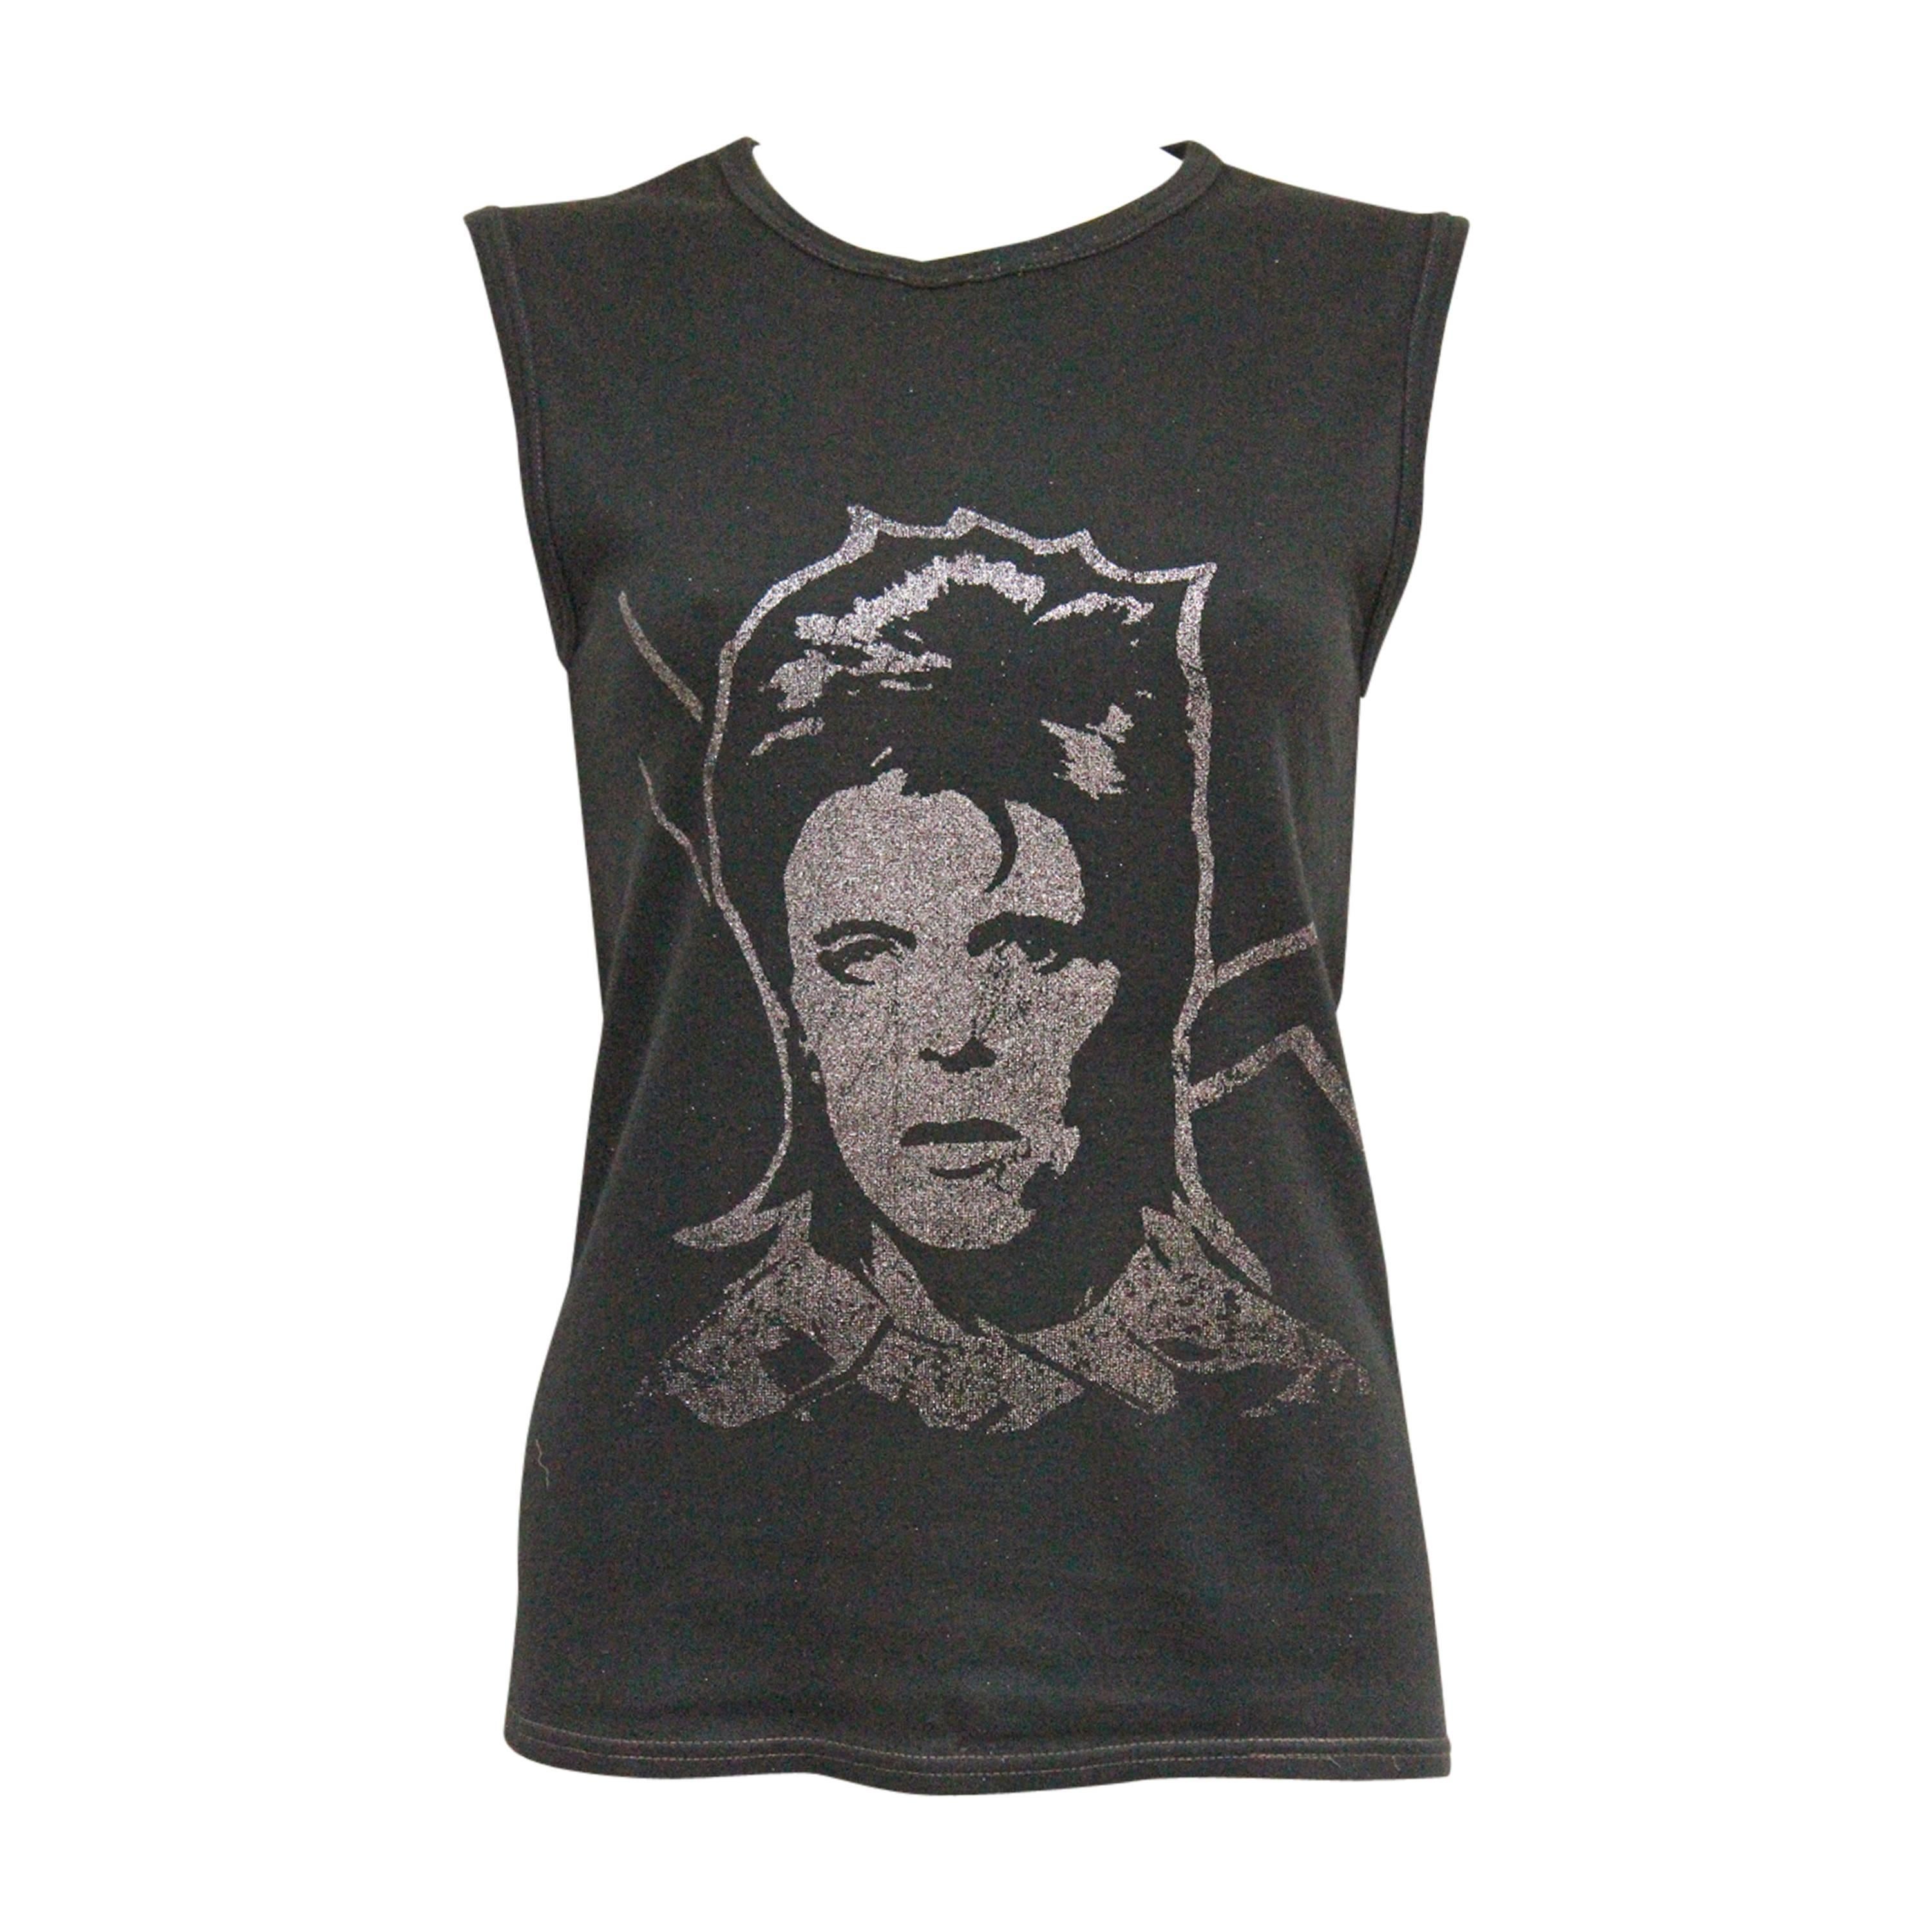 David Bowie Ziggy Stardust Vest, c. 1970s